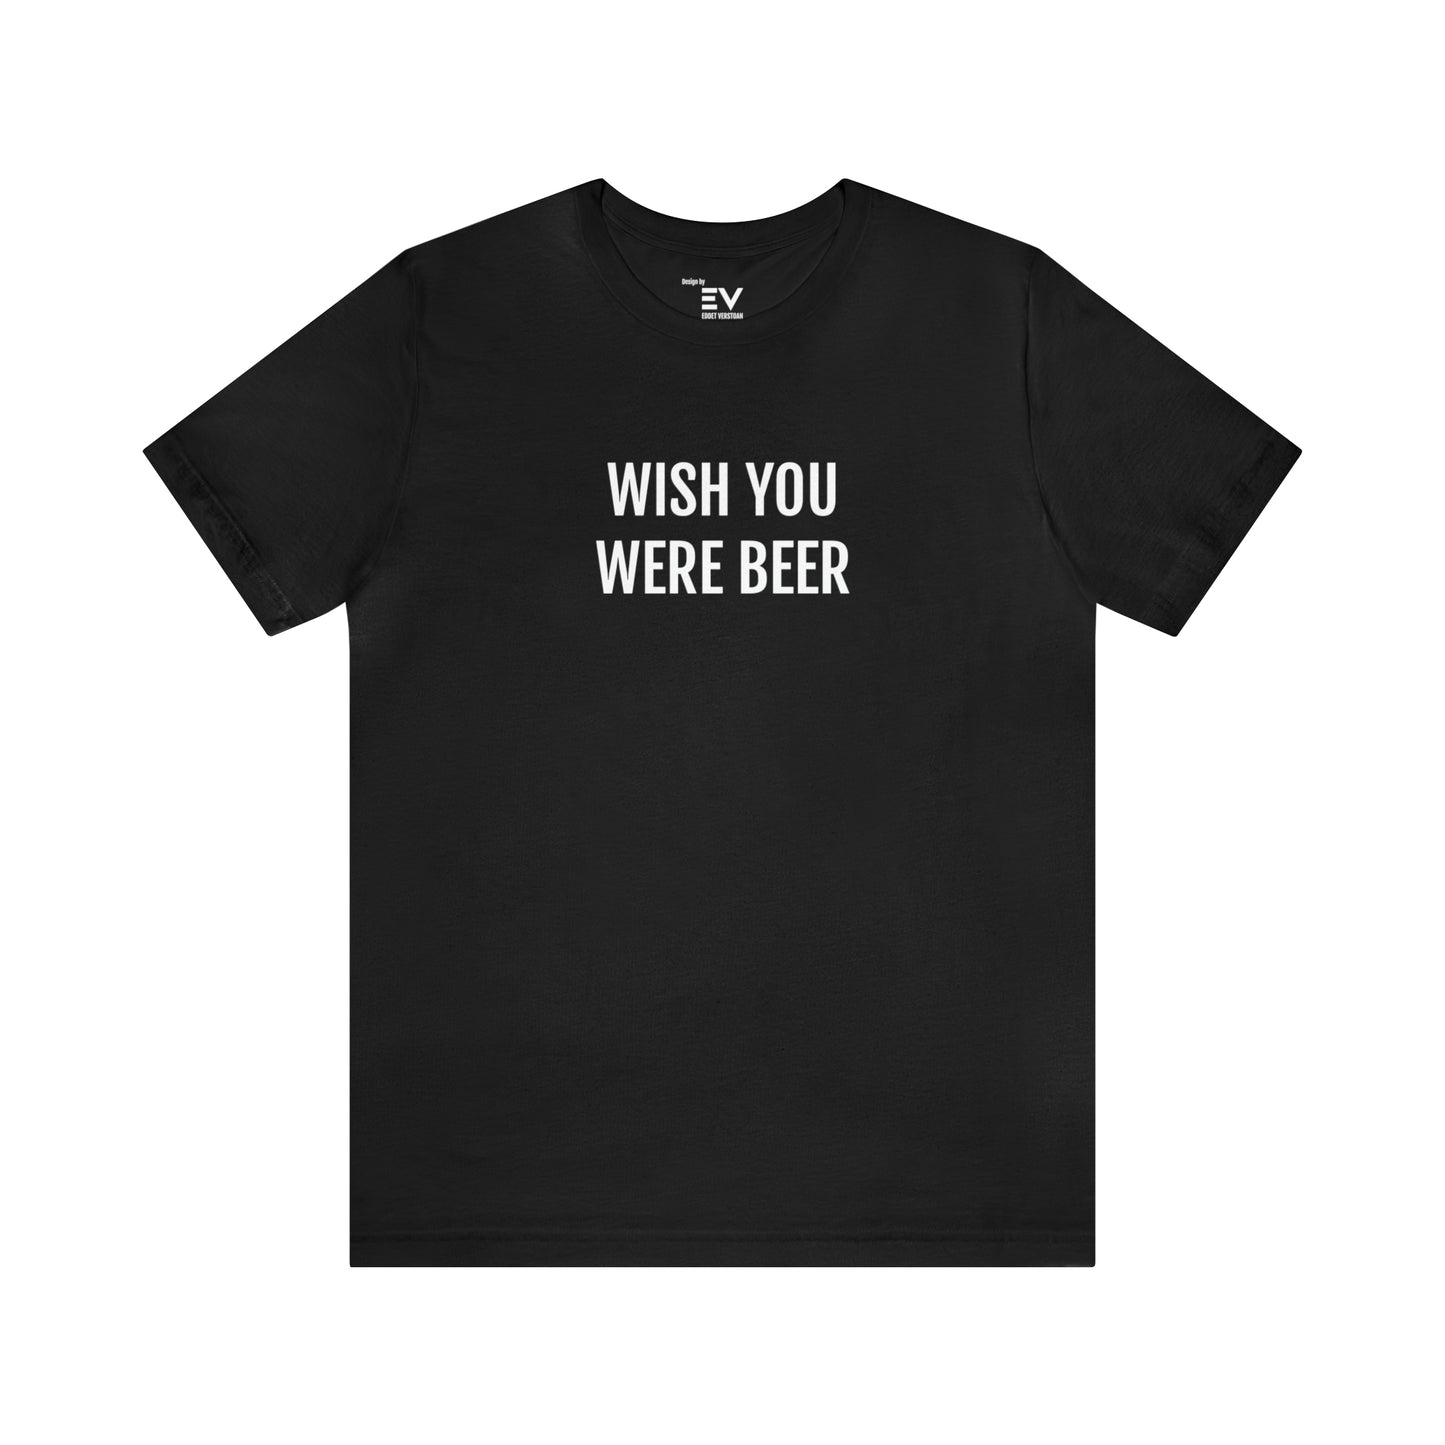 Bier t-shirts bestellen online. Zwarte Wish you were beer shirt